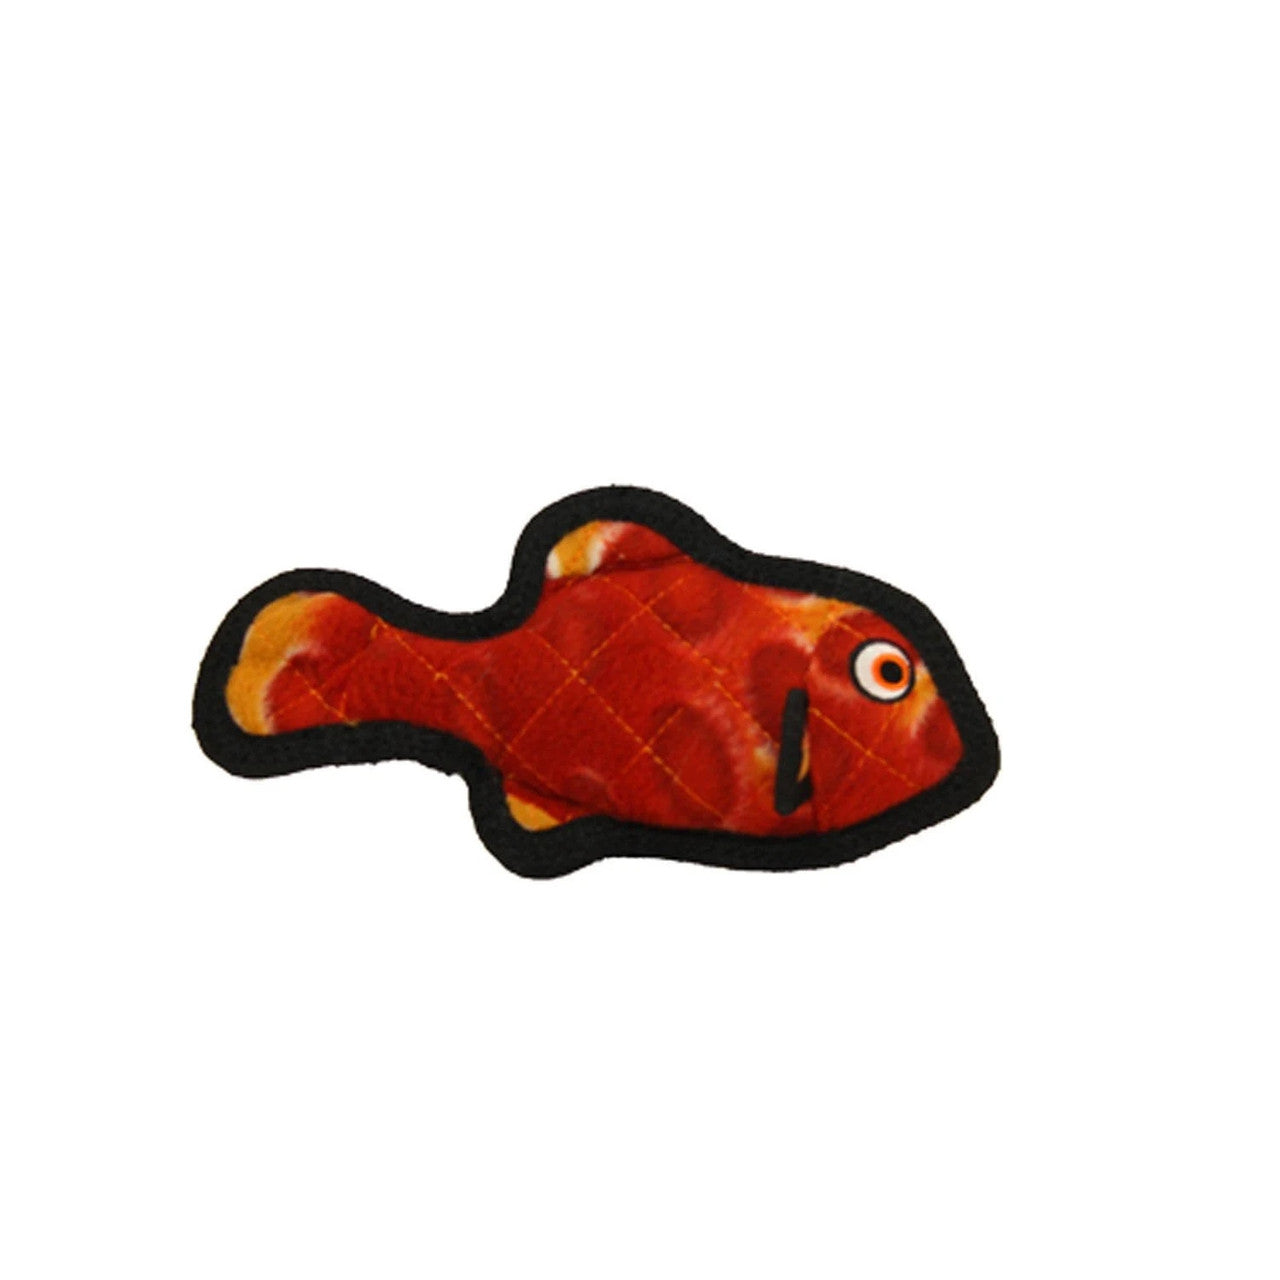 Tuffy Ocn Crtre Jr fish Red 180181908569